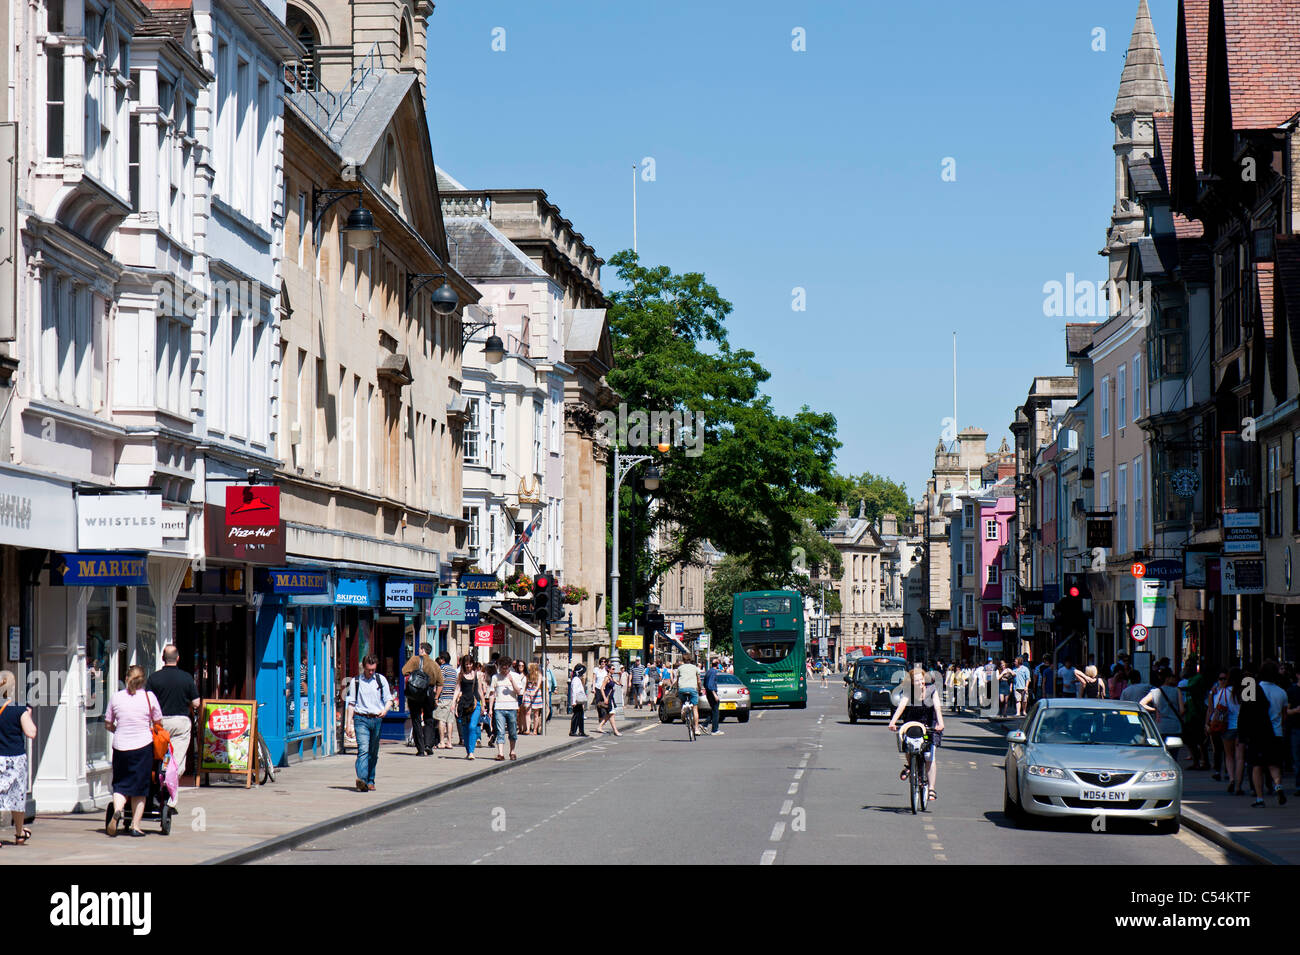 Shops on High Street, Oxford, Oxfordshire, United Kingdom Stock Photo